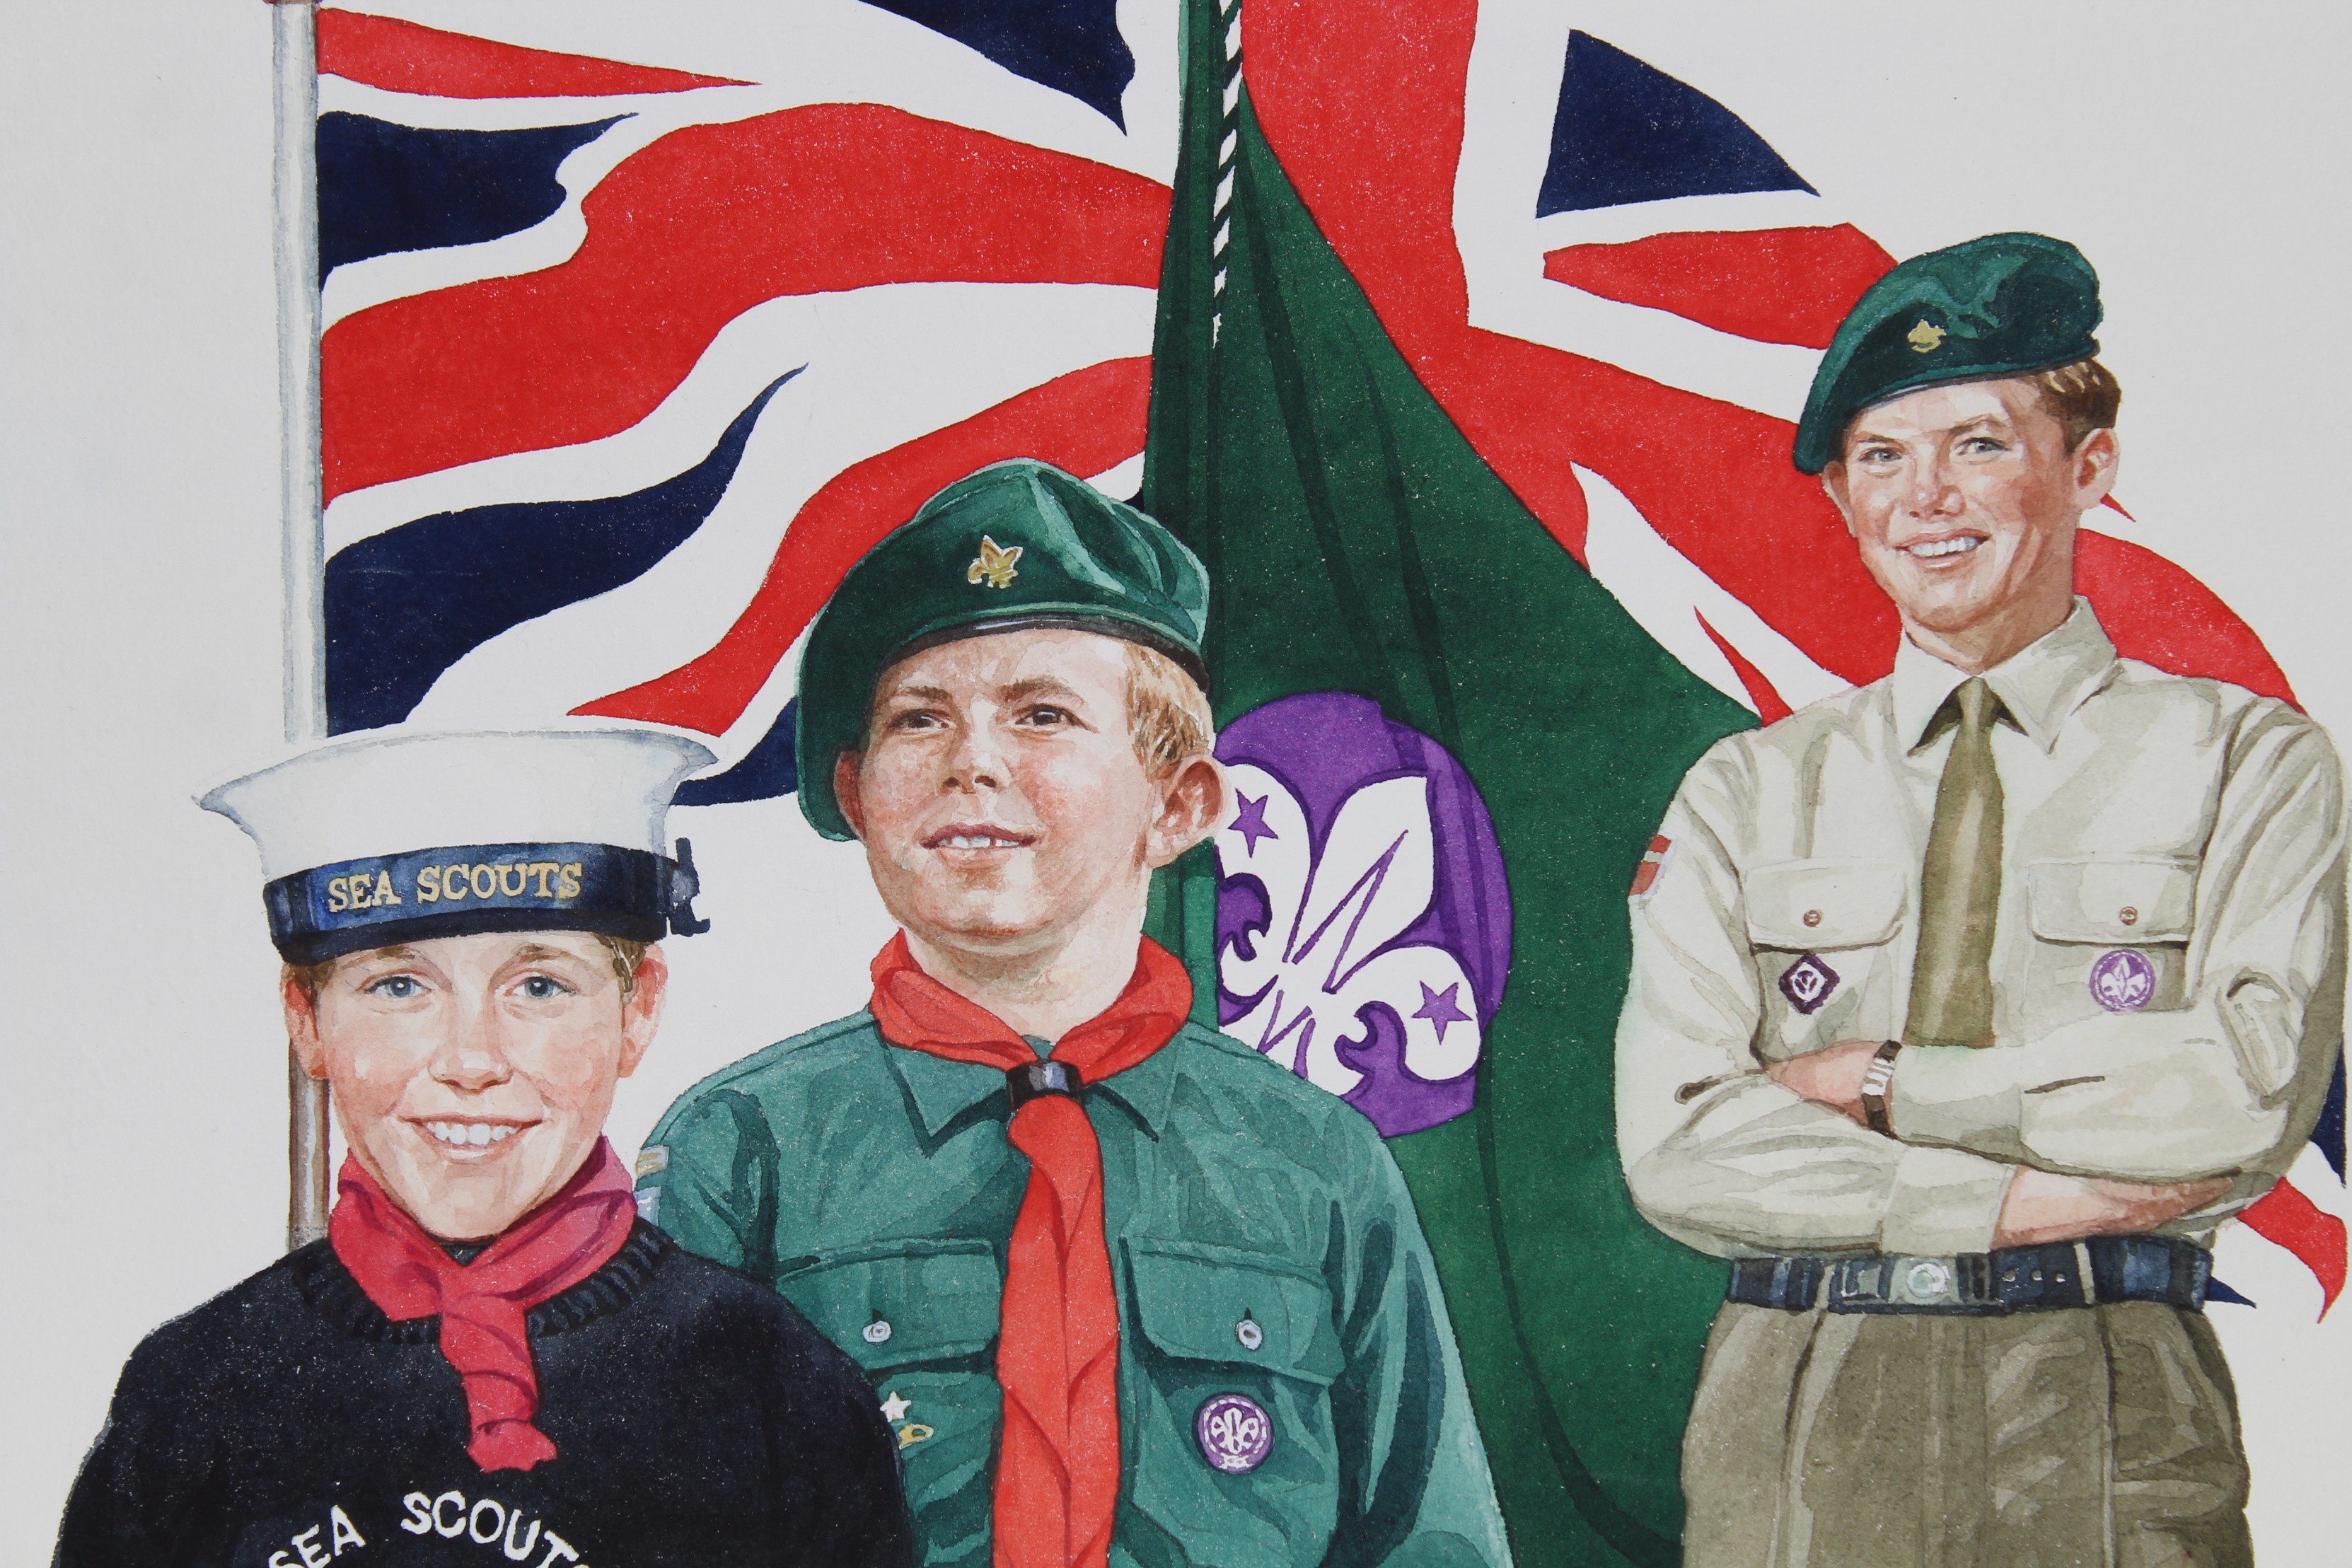 Brian Sanders (British, B. 1937) "Boy Scouts" - Image 2 of 3